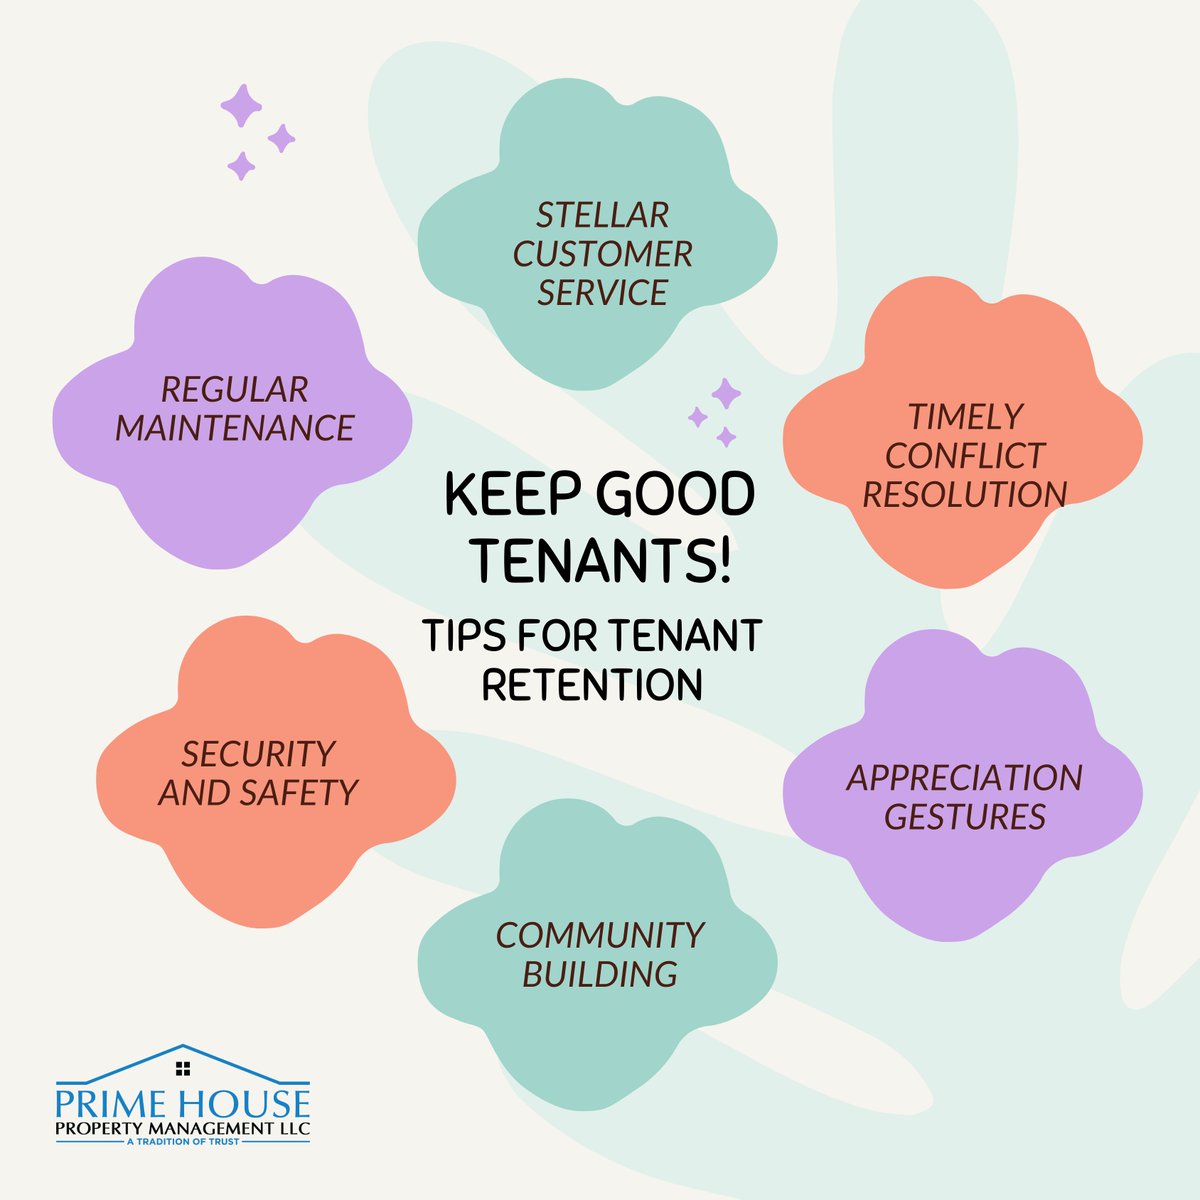 Keep good tenants! Here are top tips for tenant retention.
----
🌐 primehouseproperties.com
.
#PropertyManagement #RealEstateManagement #PropertyPortfolio #RentalManagement #LandlordServices #EfficientPropertyCare #TenantRelations #InvestmentProperty #AssetManagement